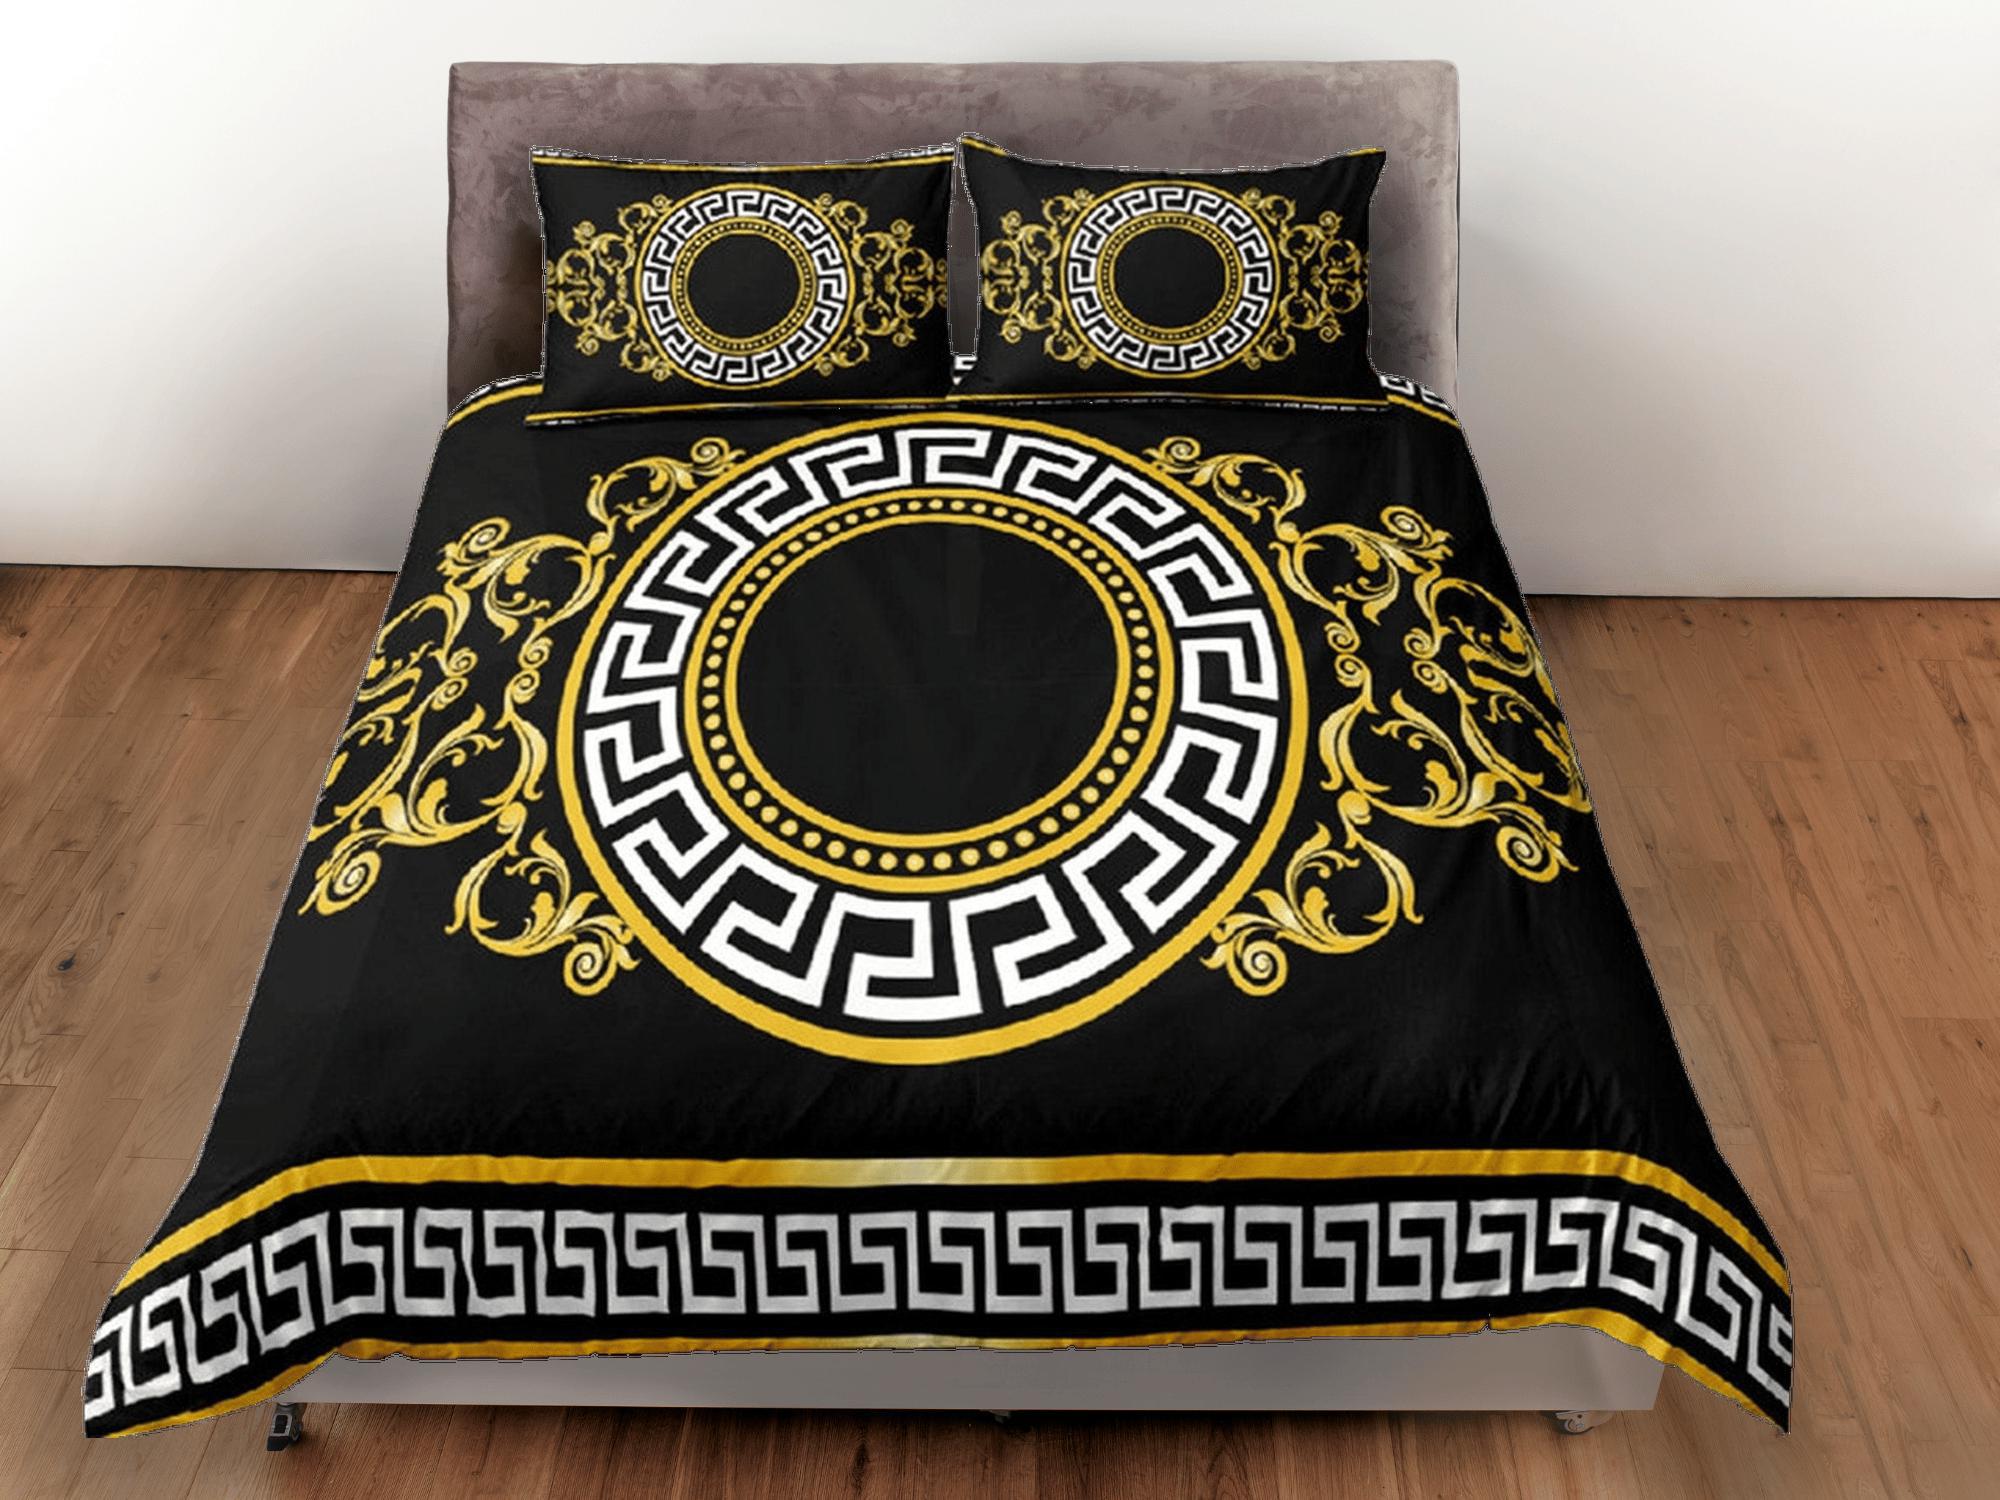 daintyduvet Luxury Bedding Set, Victorian Duvet Cover Set, Baroque Style Duvet Cover with Pillowcase, Black Bedding